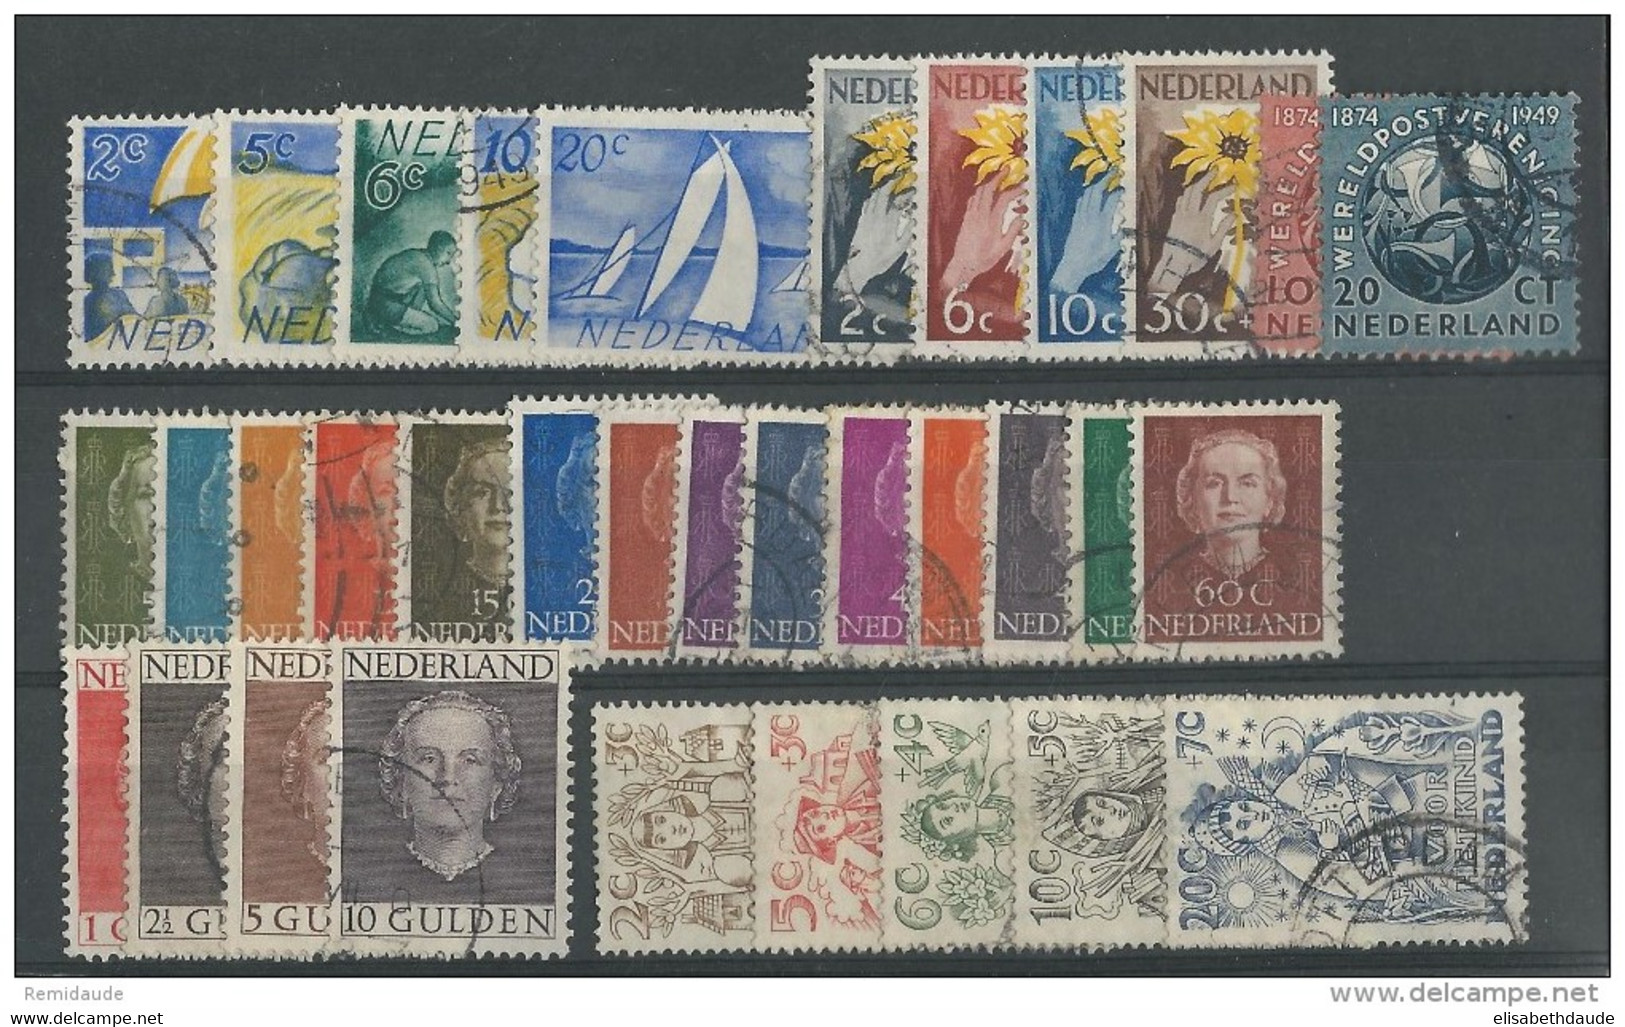 NEDERLAND - 1949 ANNEE COMPLETE - YVERT N° 504/534 OBLITERES - COTE = 61 EUROS - Années Complètes